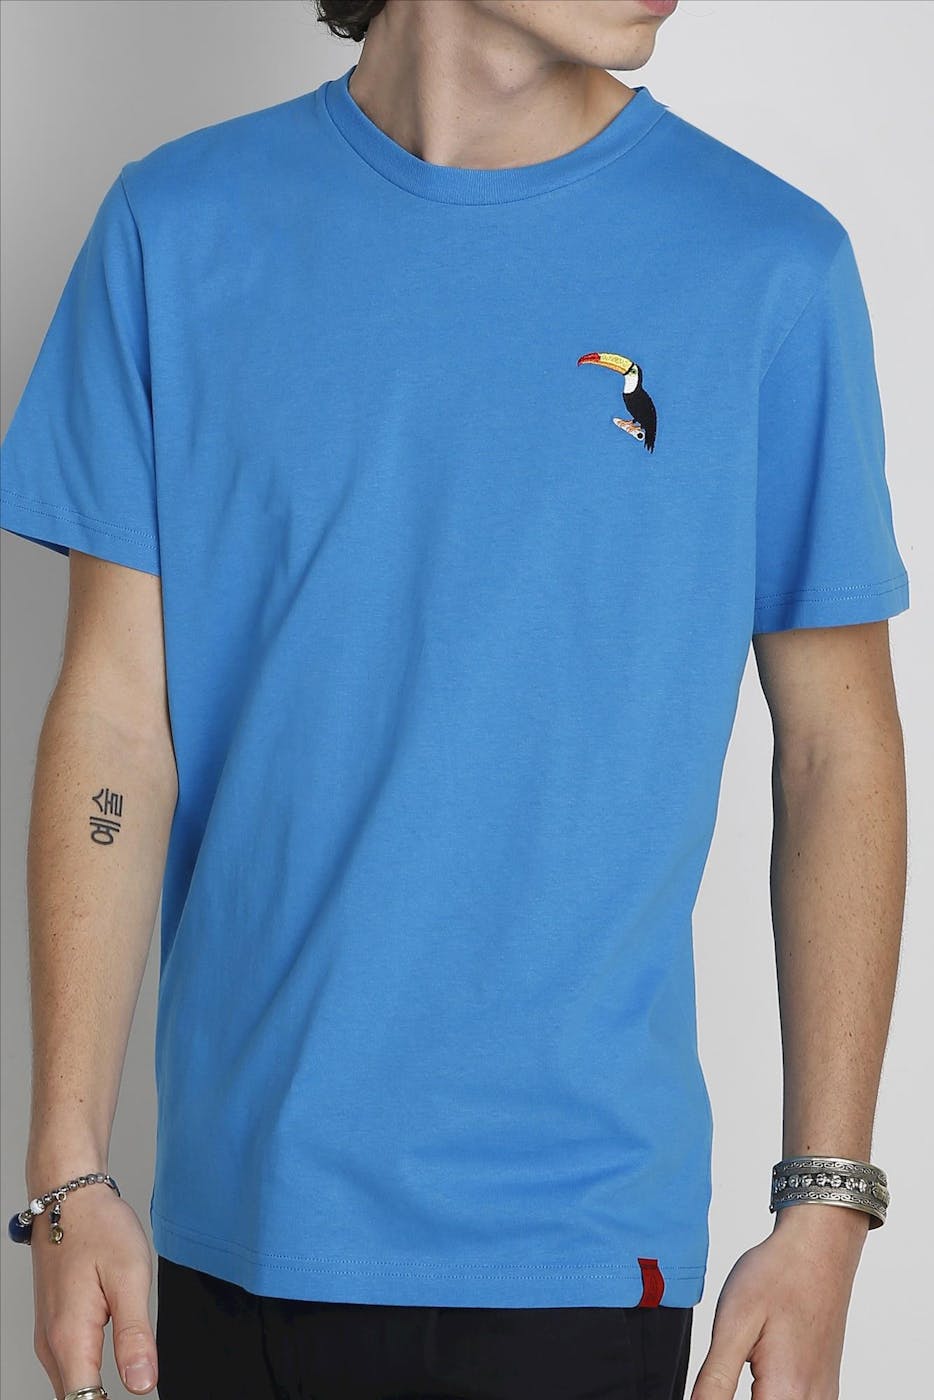 Antwrp - Felblauwe Toekan T-shirt